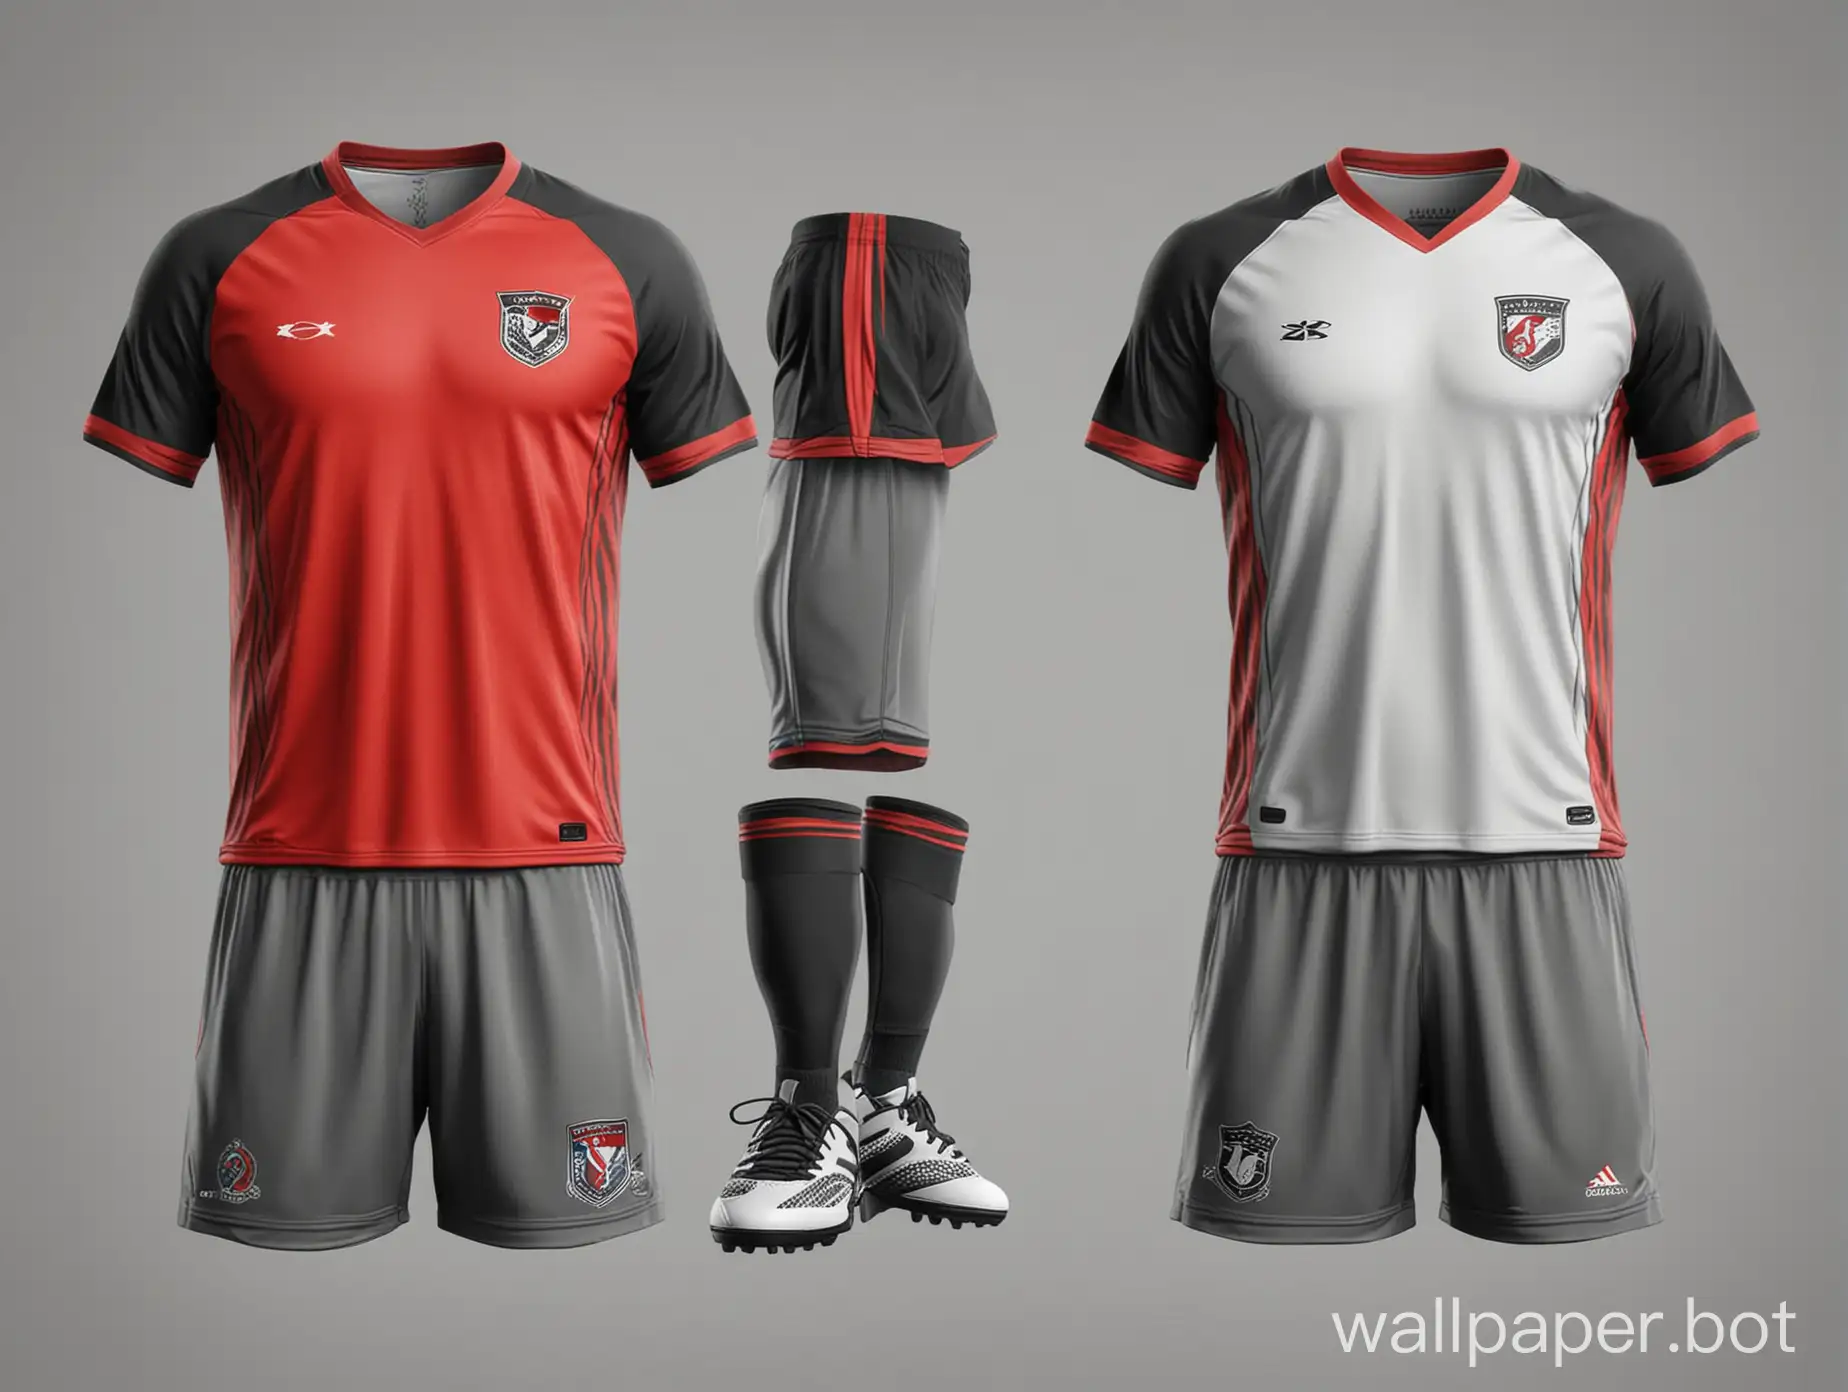 concept of soccer uniform, red-gray-black color, symmetrical pattern on white background sketch concept form